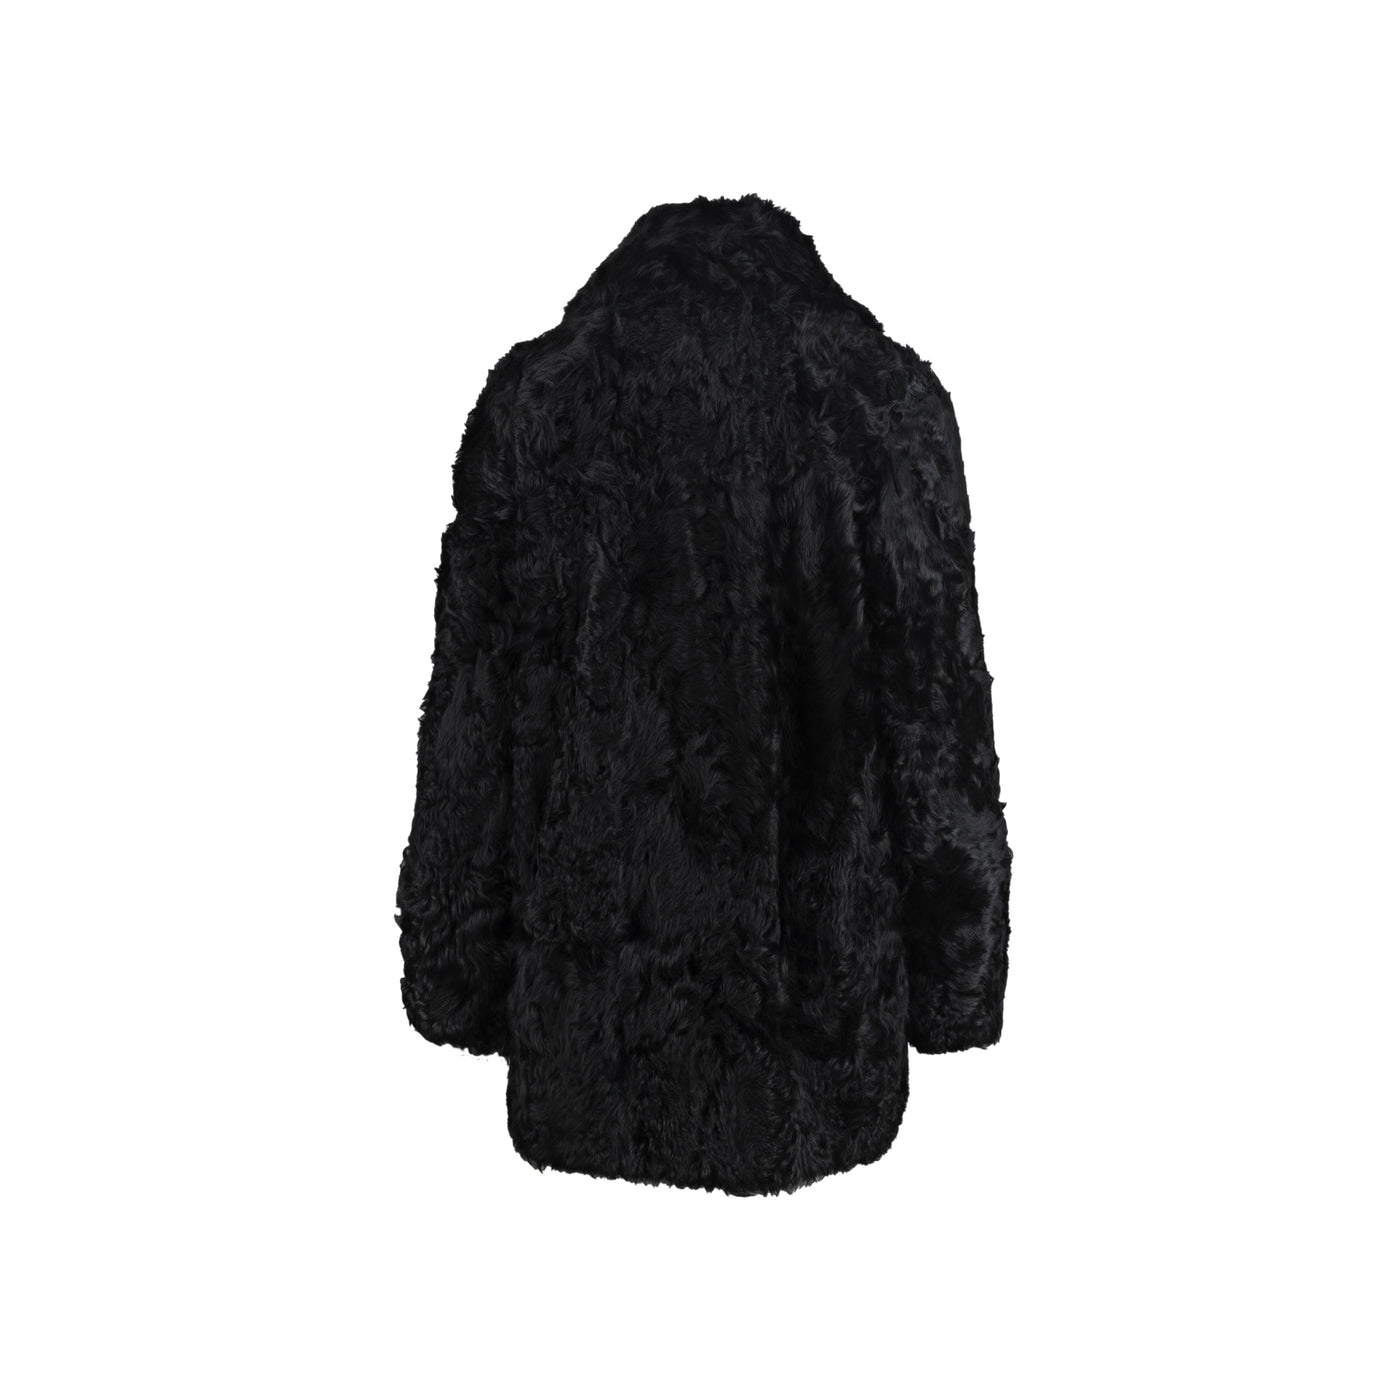 Inès & Maréchal astrakhan coat black fur NFT pre-owned